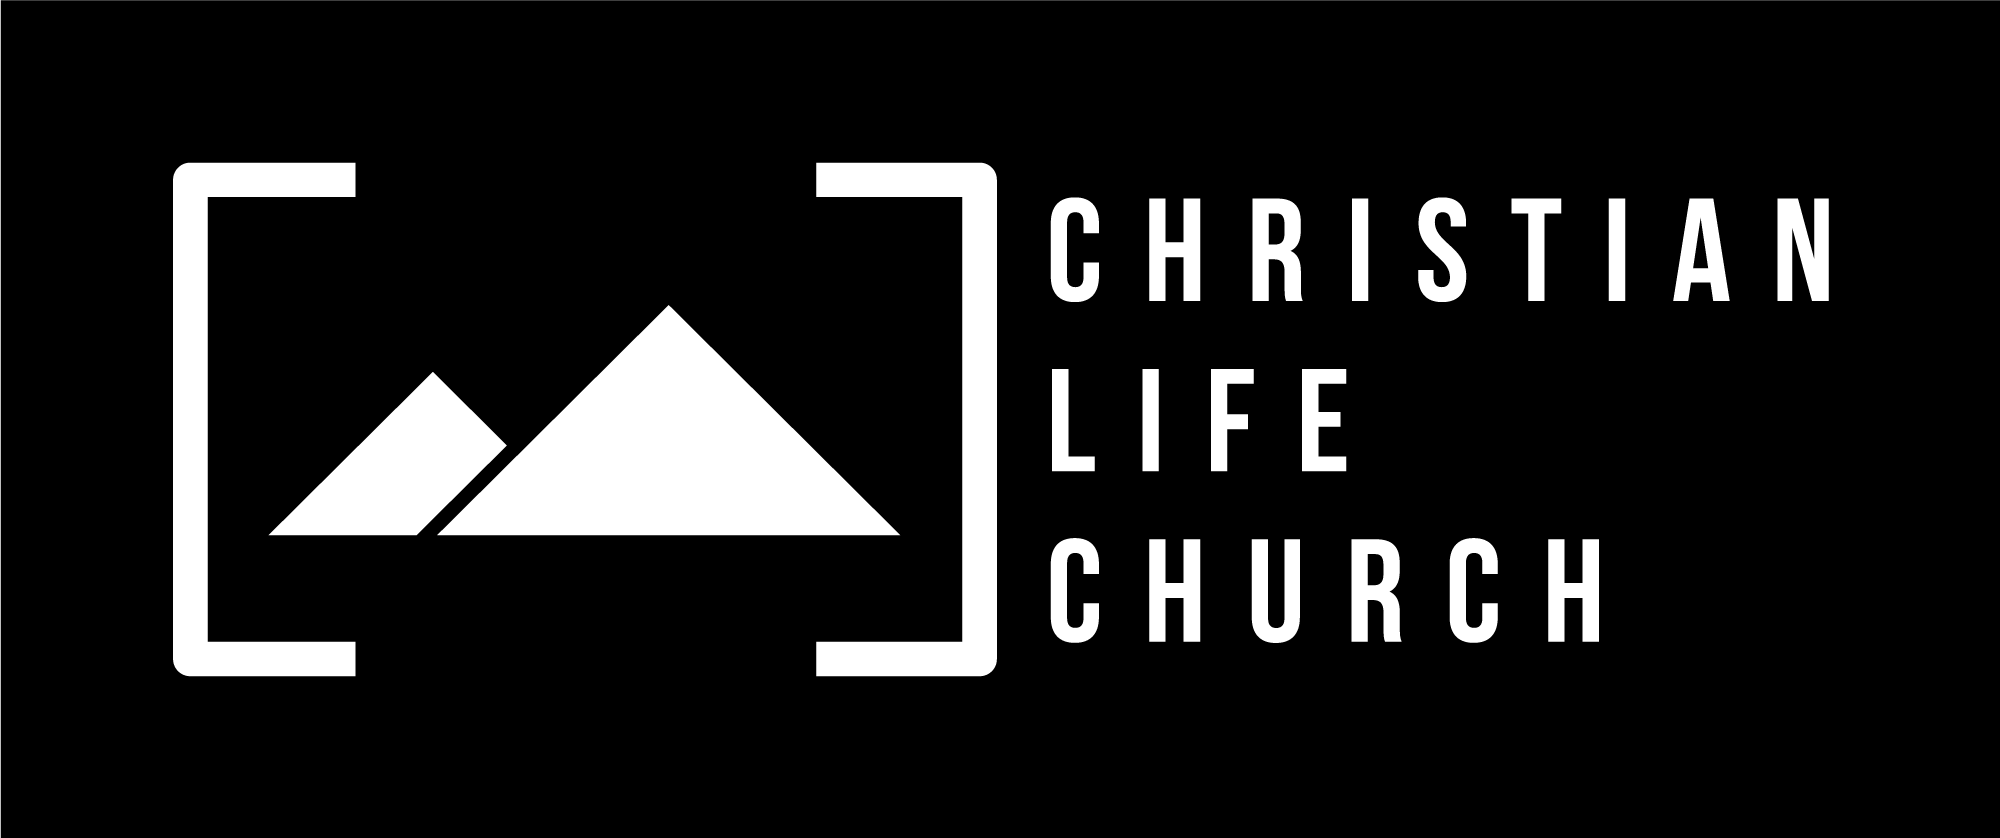 Christian Life church